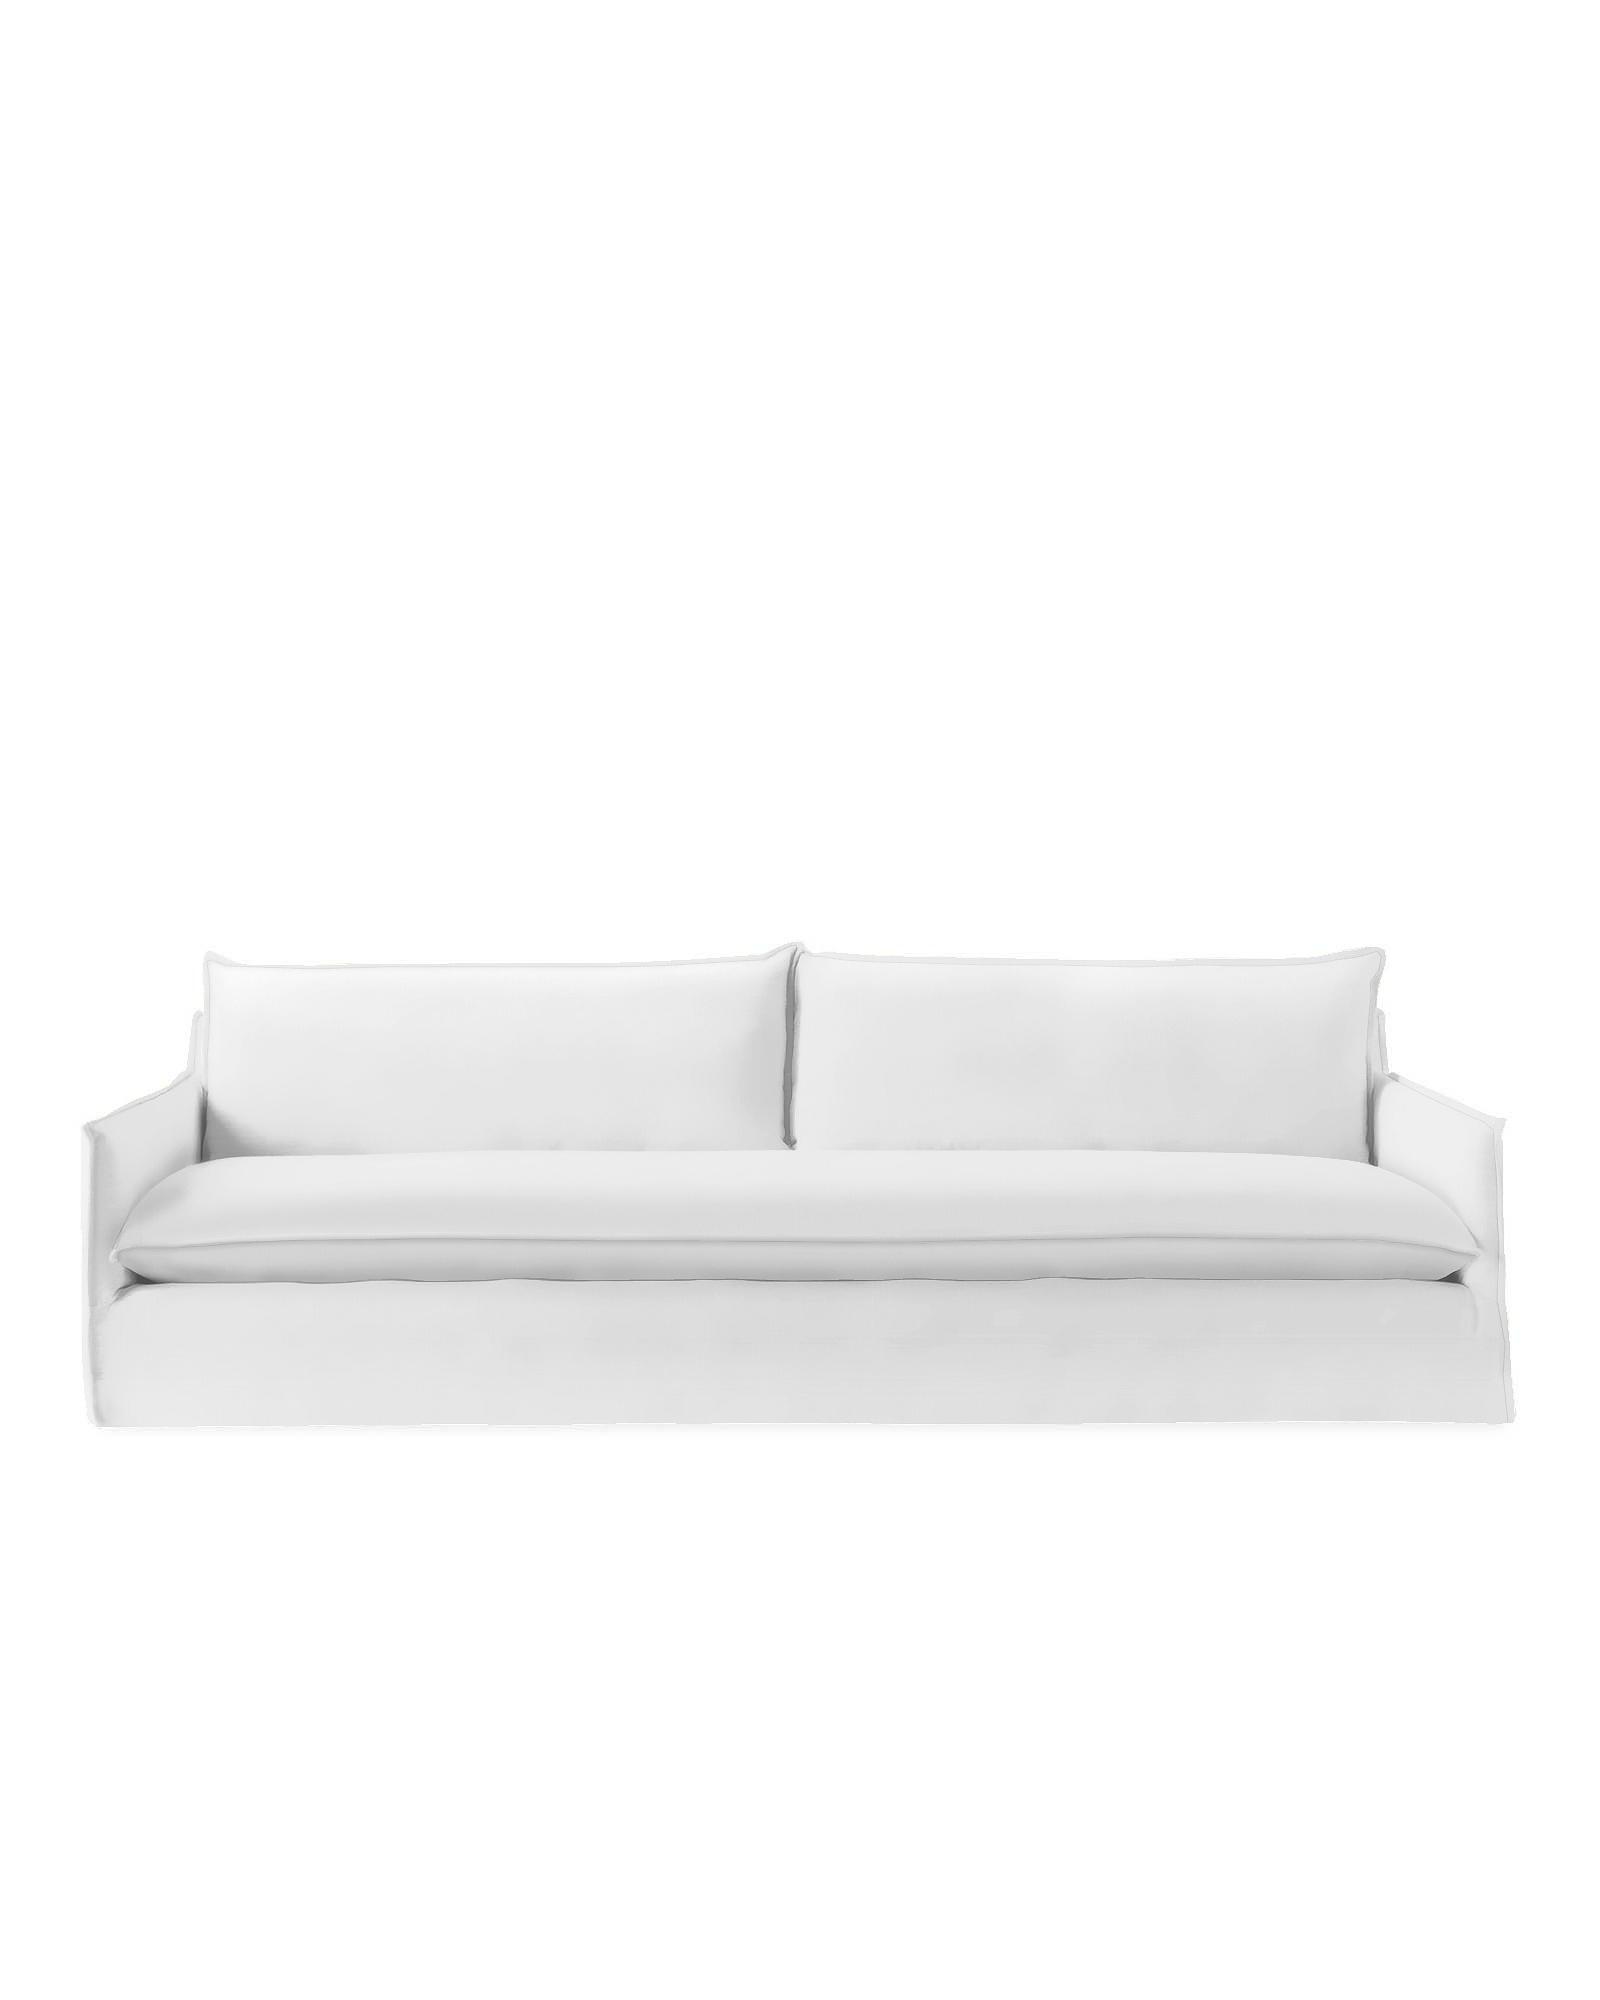 Sundial Luxury Depth Sofa